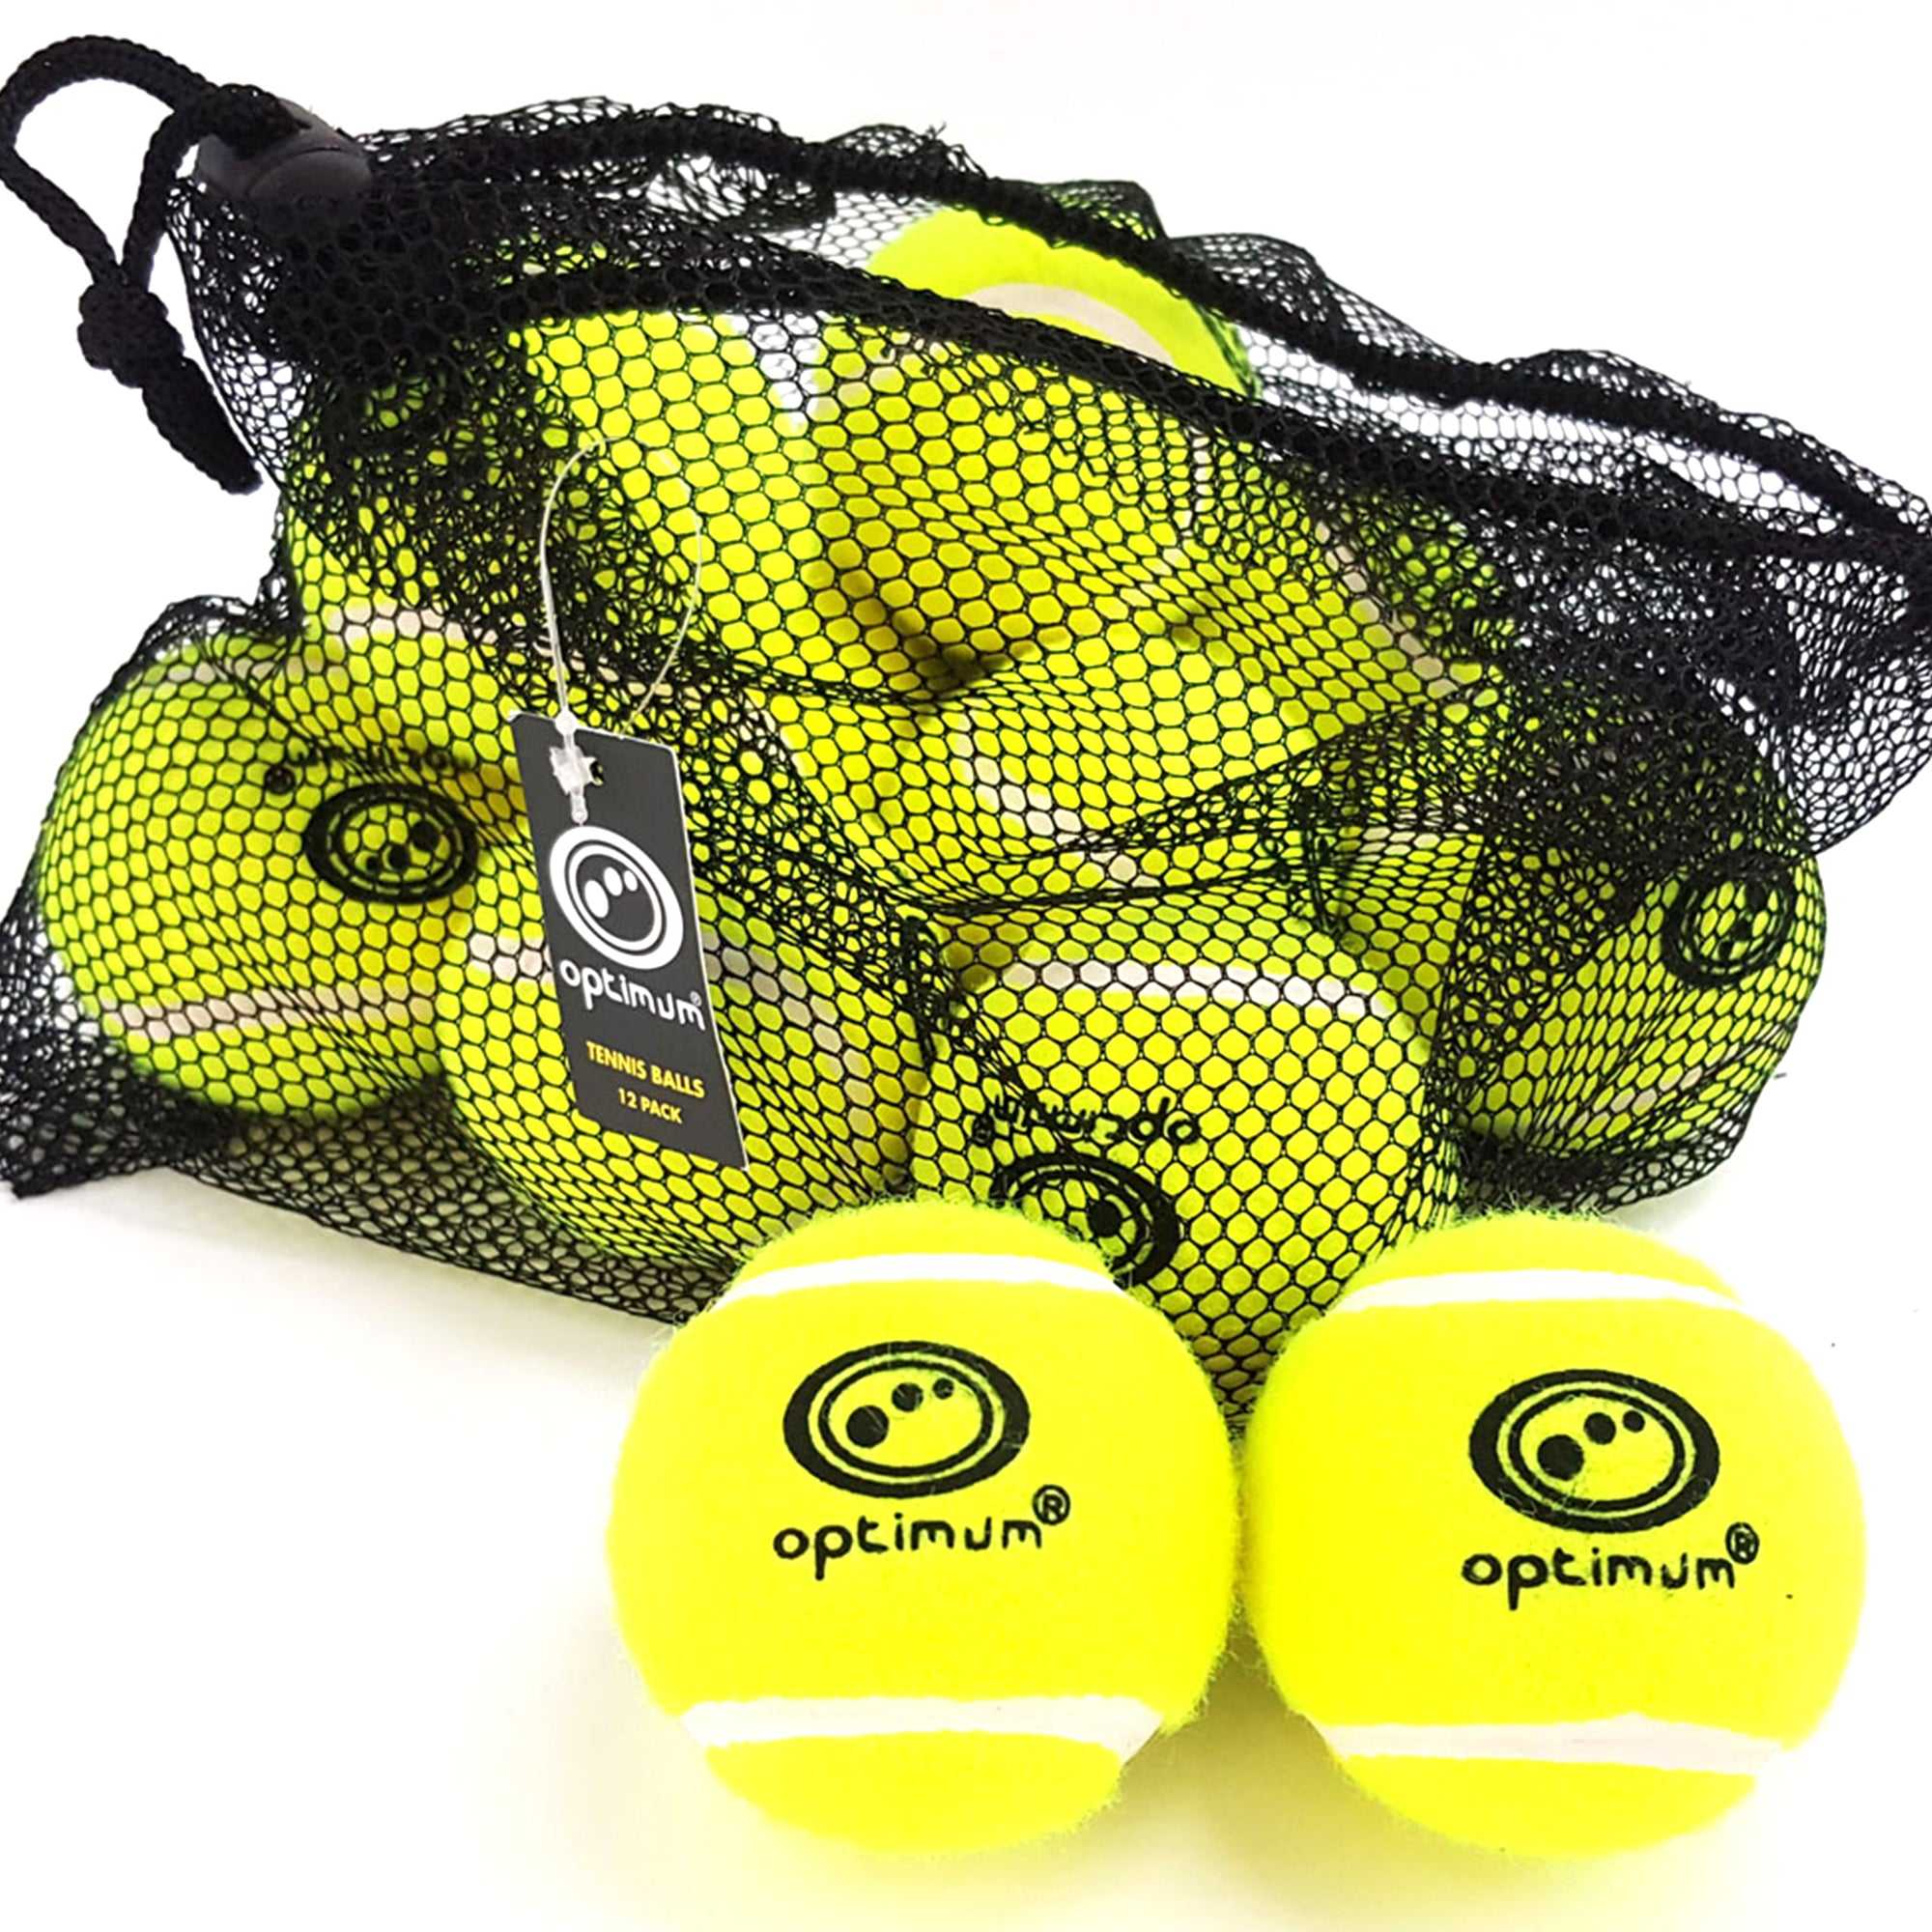 Tennis Balls 12 Pack - Optimum